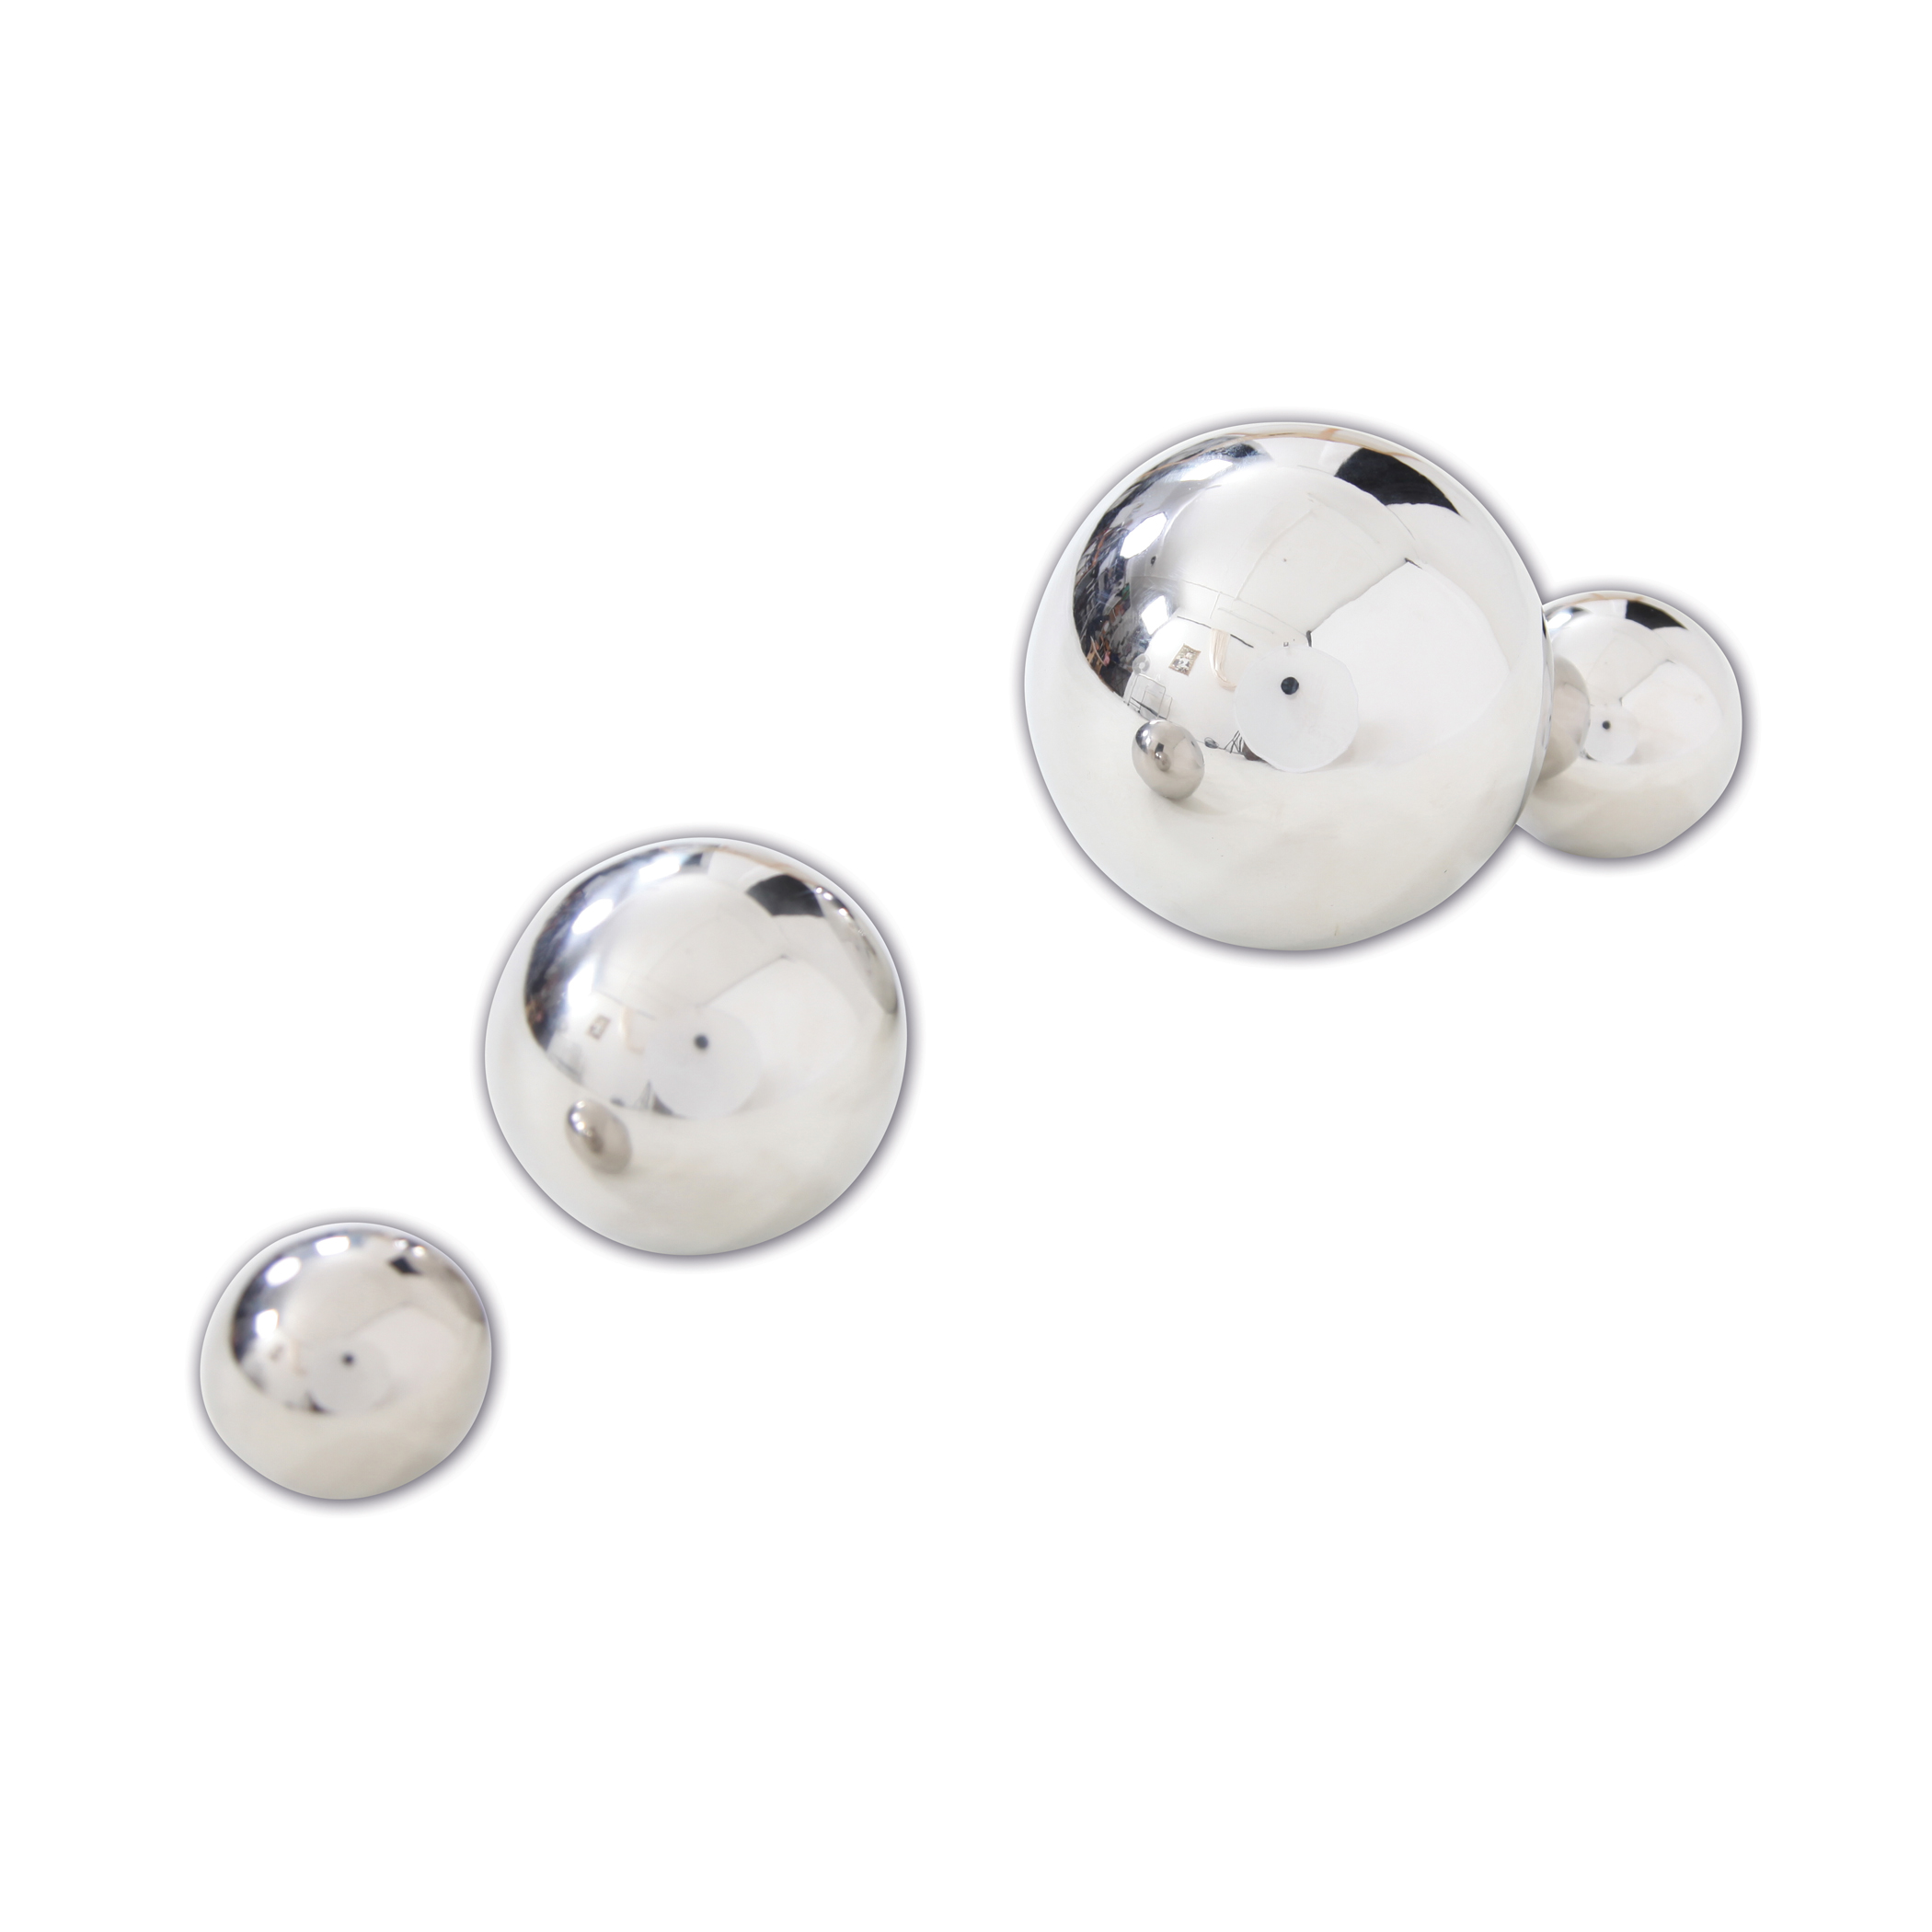 TickiT Sensory Reflective Balls - Silver - Set of 4